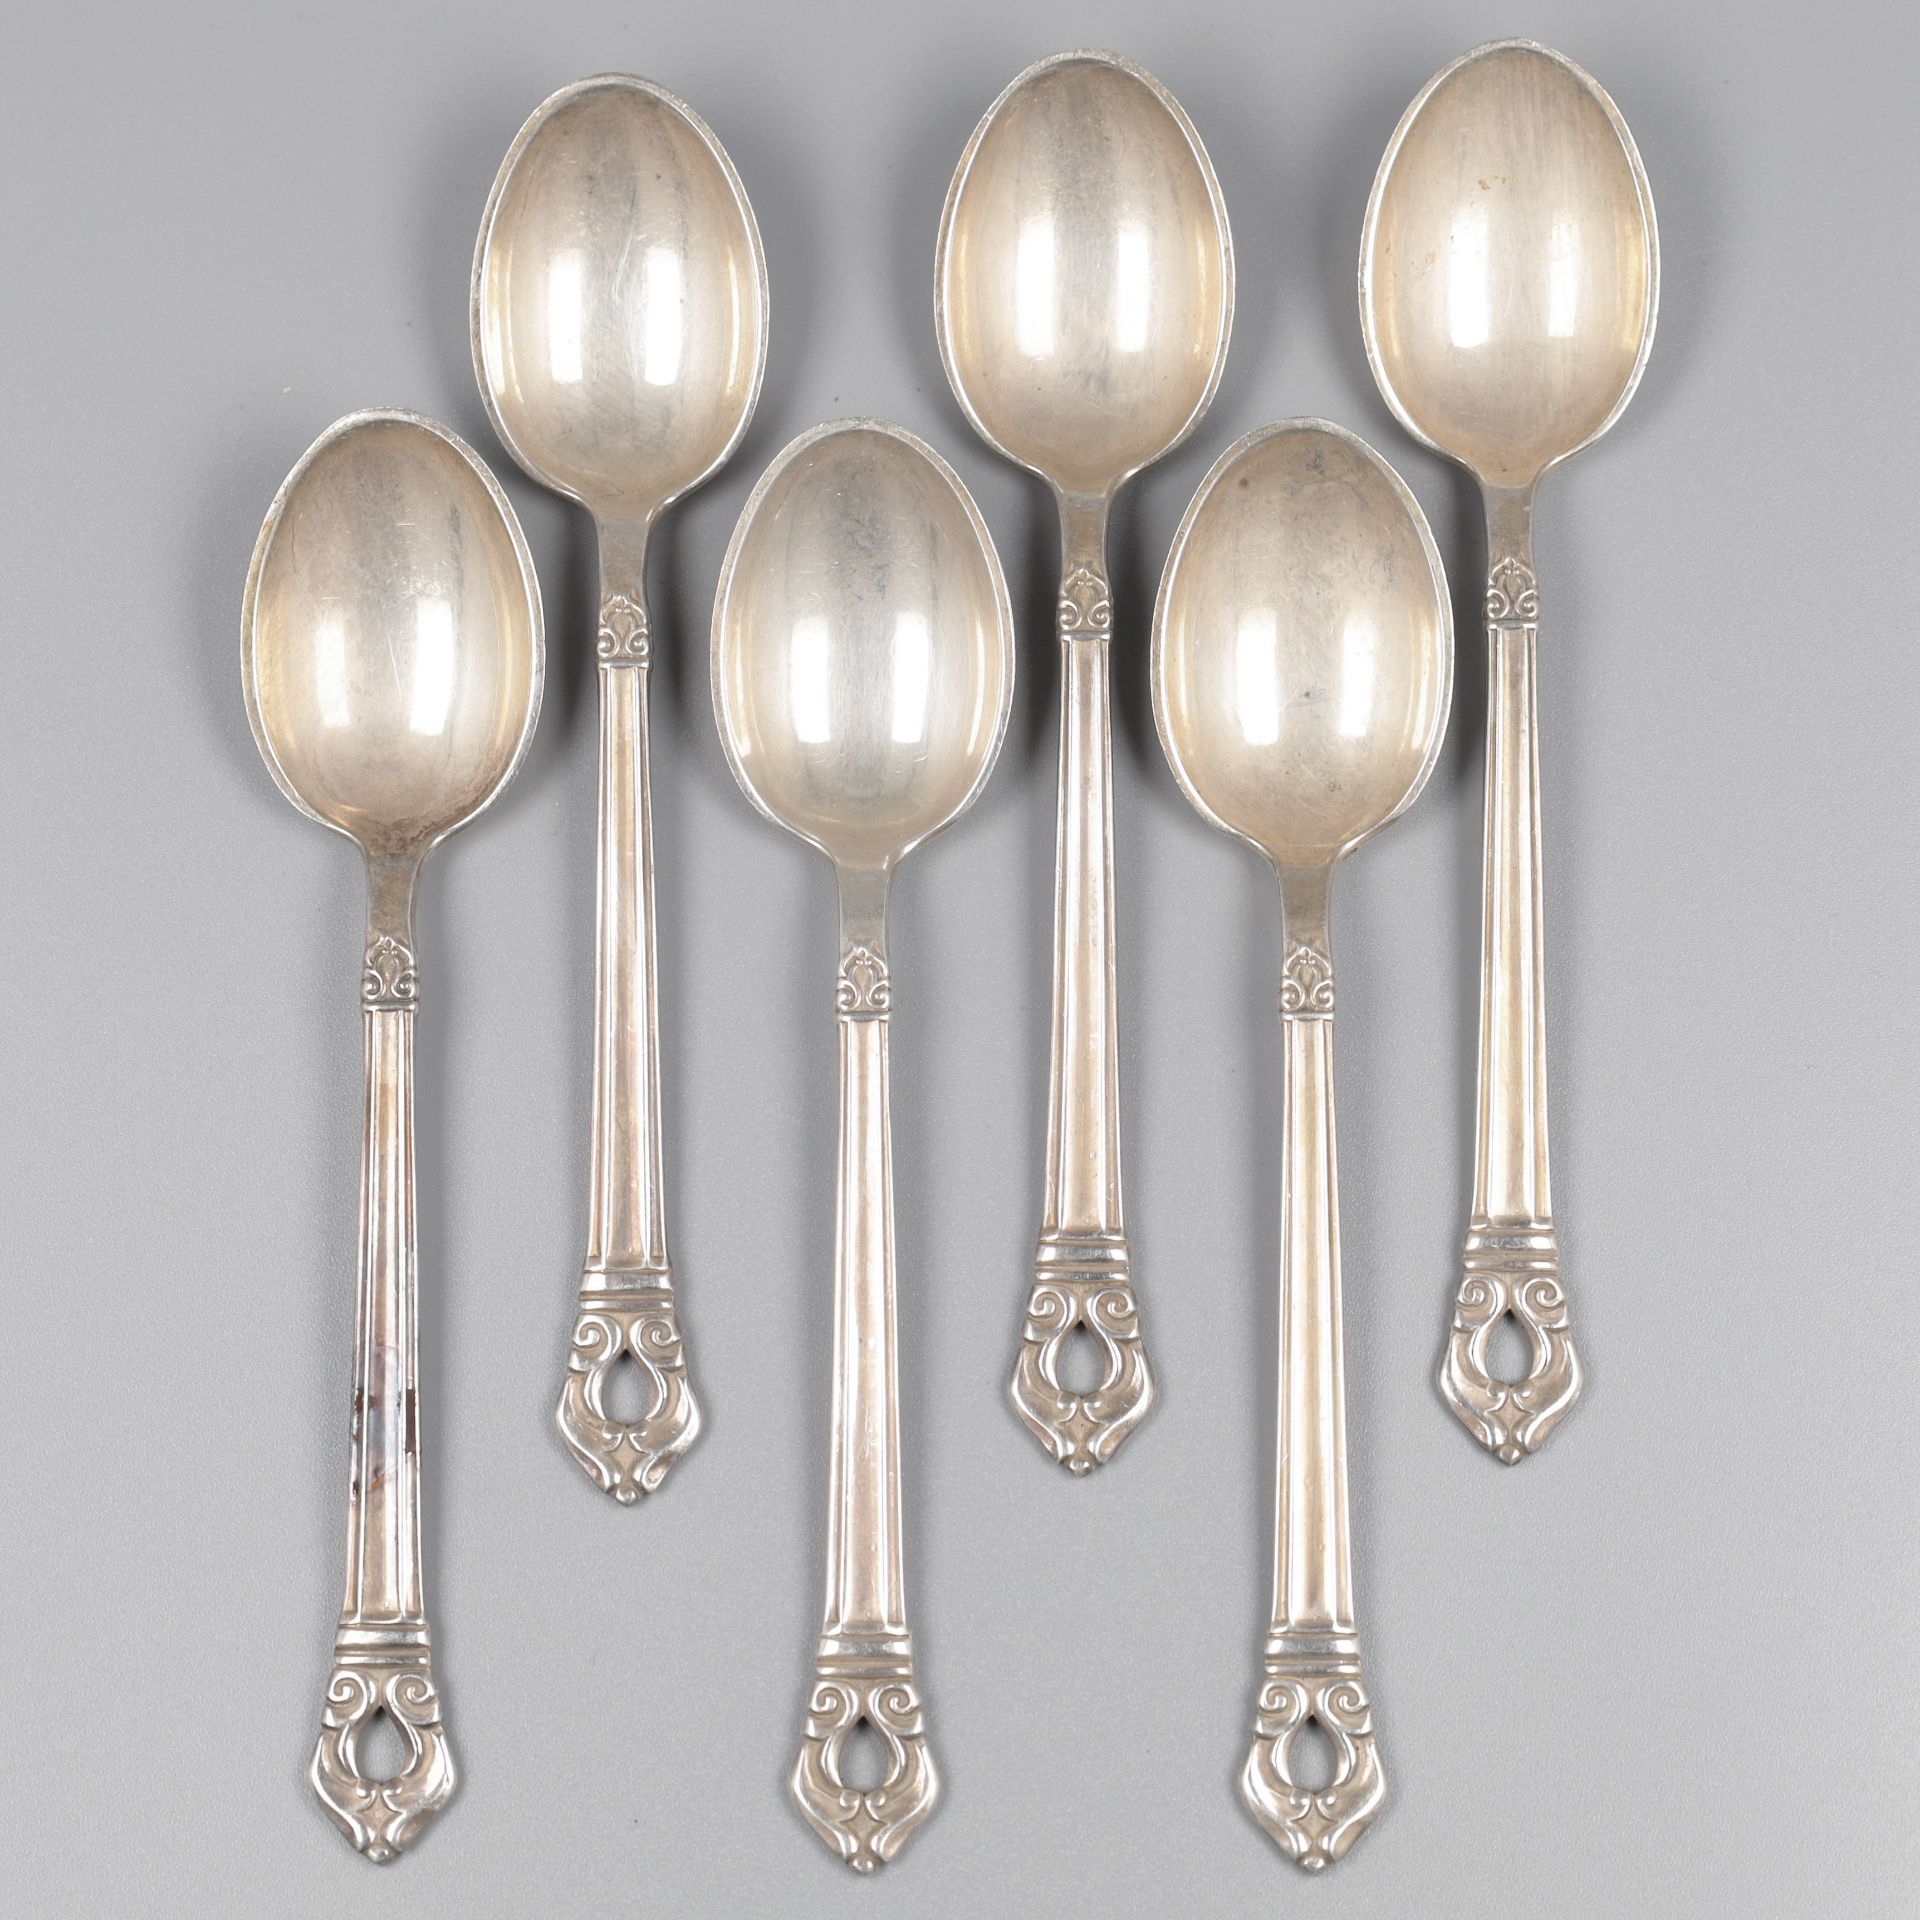 6-piece set of teaspoons, model Royal Danish at Codan S.A. (Mexico), silver.